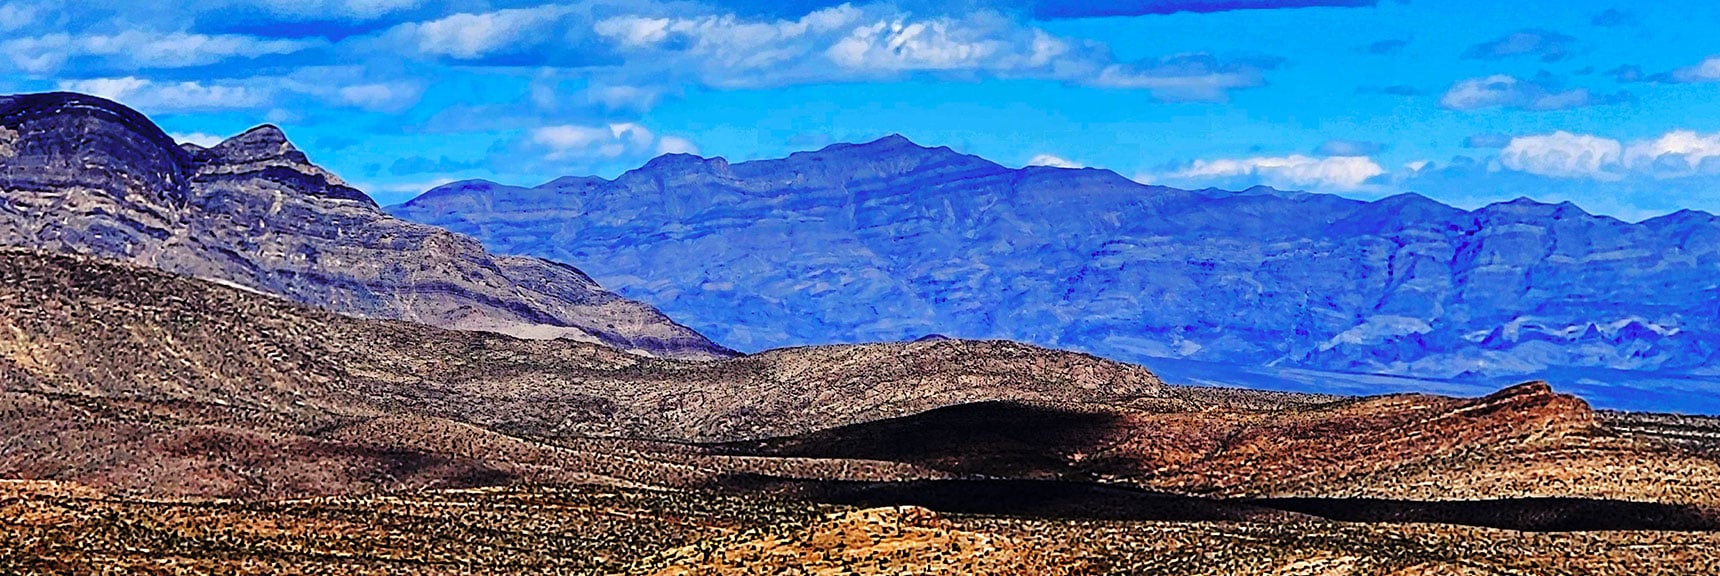 Distant View of Gass Peak, North End of Las Vegas Valley. | Western High Ridge | Blue Diamond Hill, Nevada